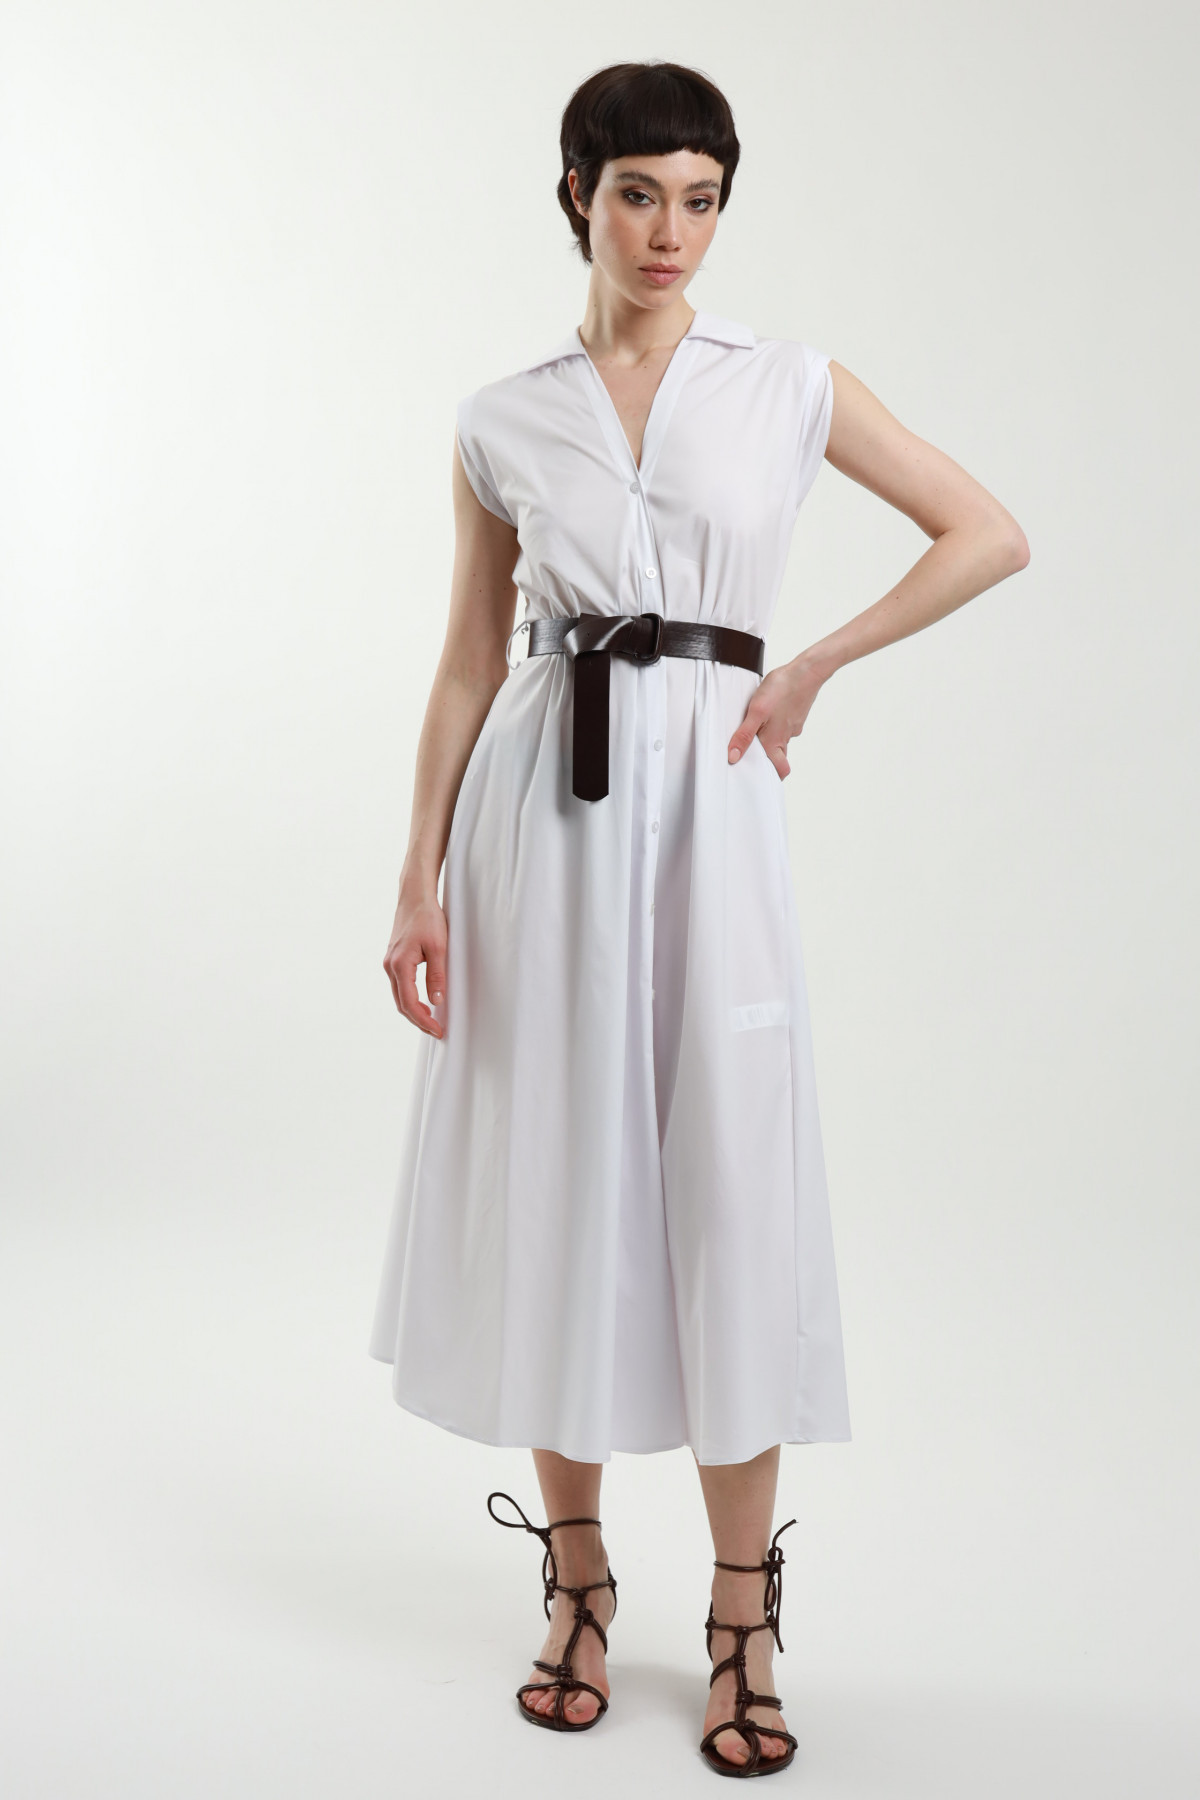 Sleeveless dress with belt